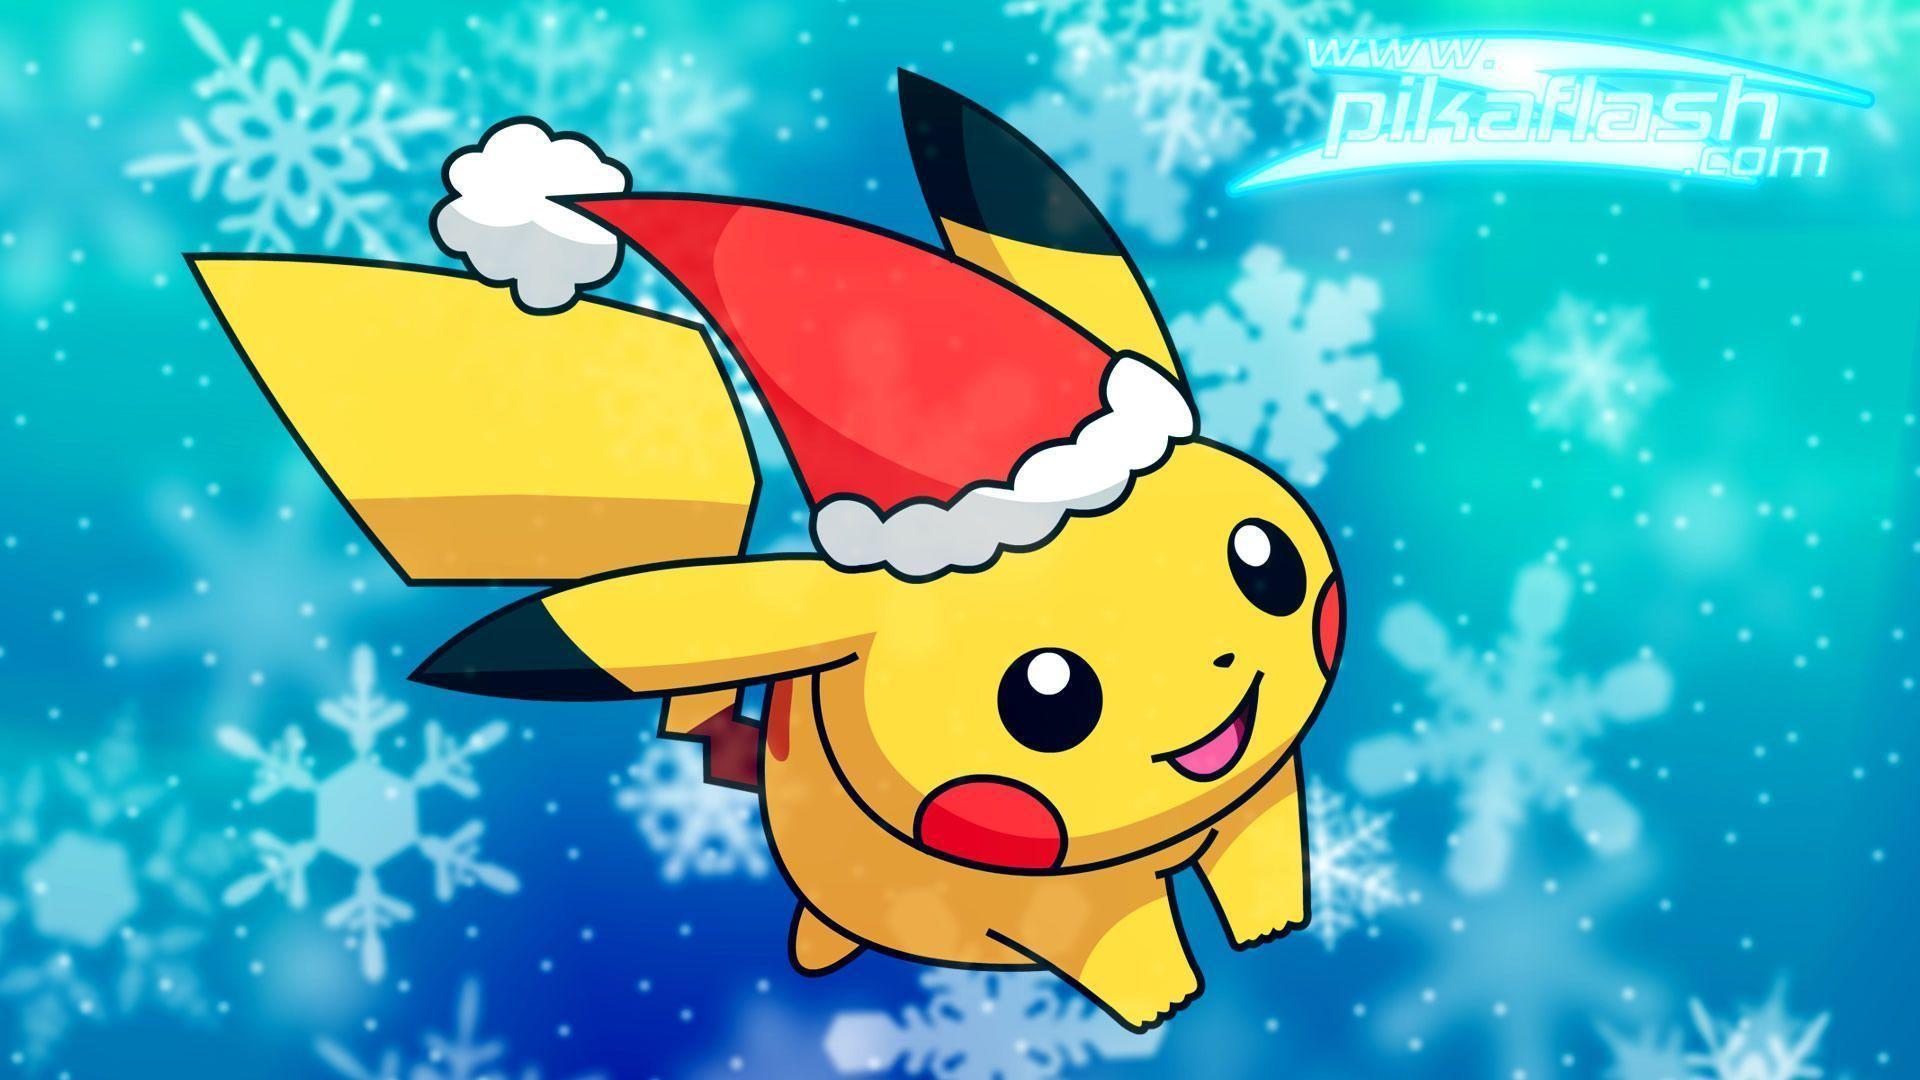 Xmas Stuff For > Pokemon Christmas Wallpaper 2012